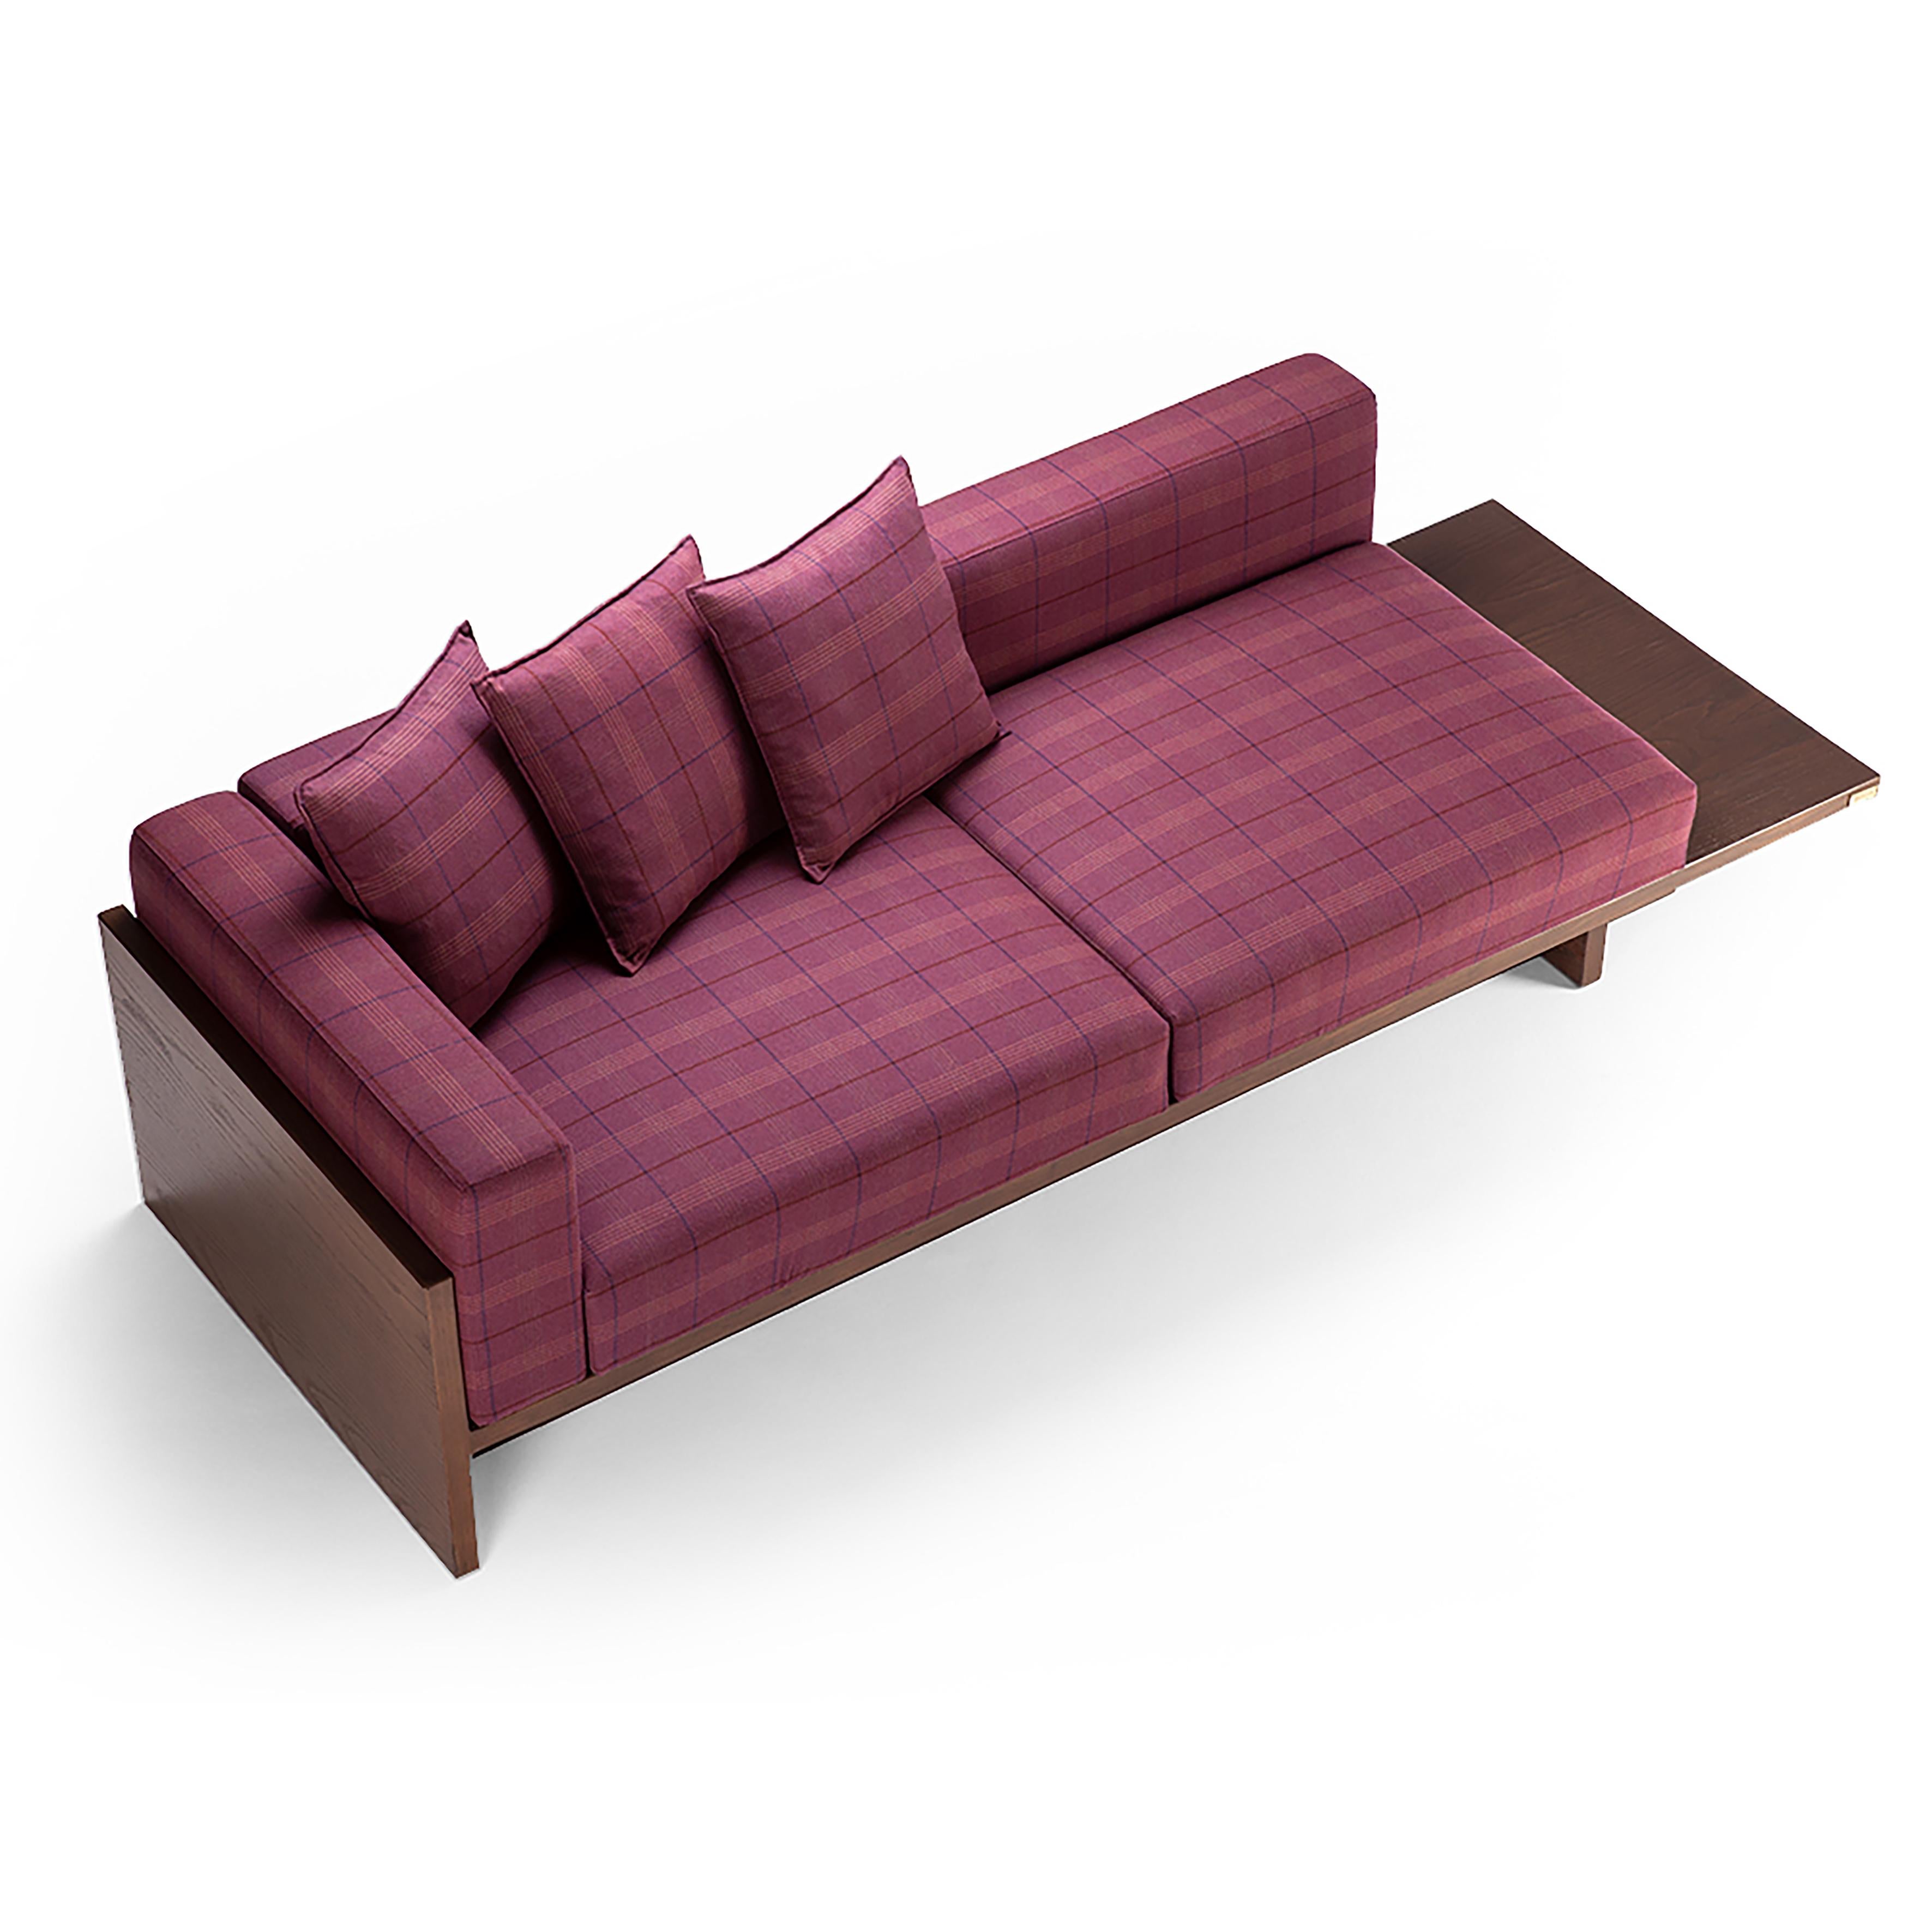 Portuguese Contemporary Modern Chaplin Sofa in Bordeaux Fabric & Dark Oak by Collector  For Sale